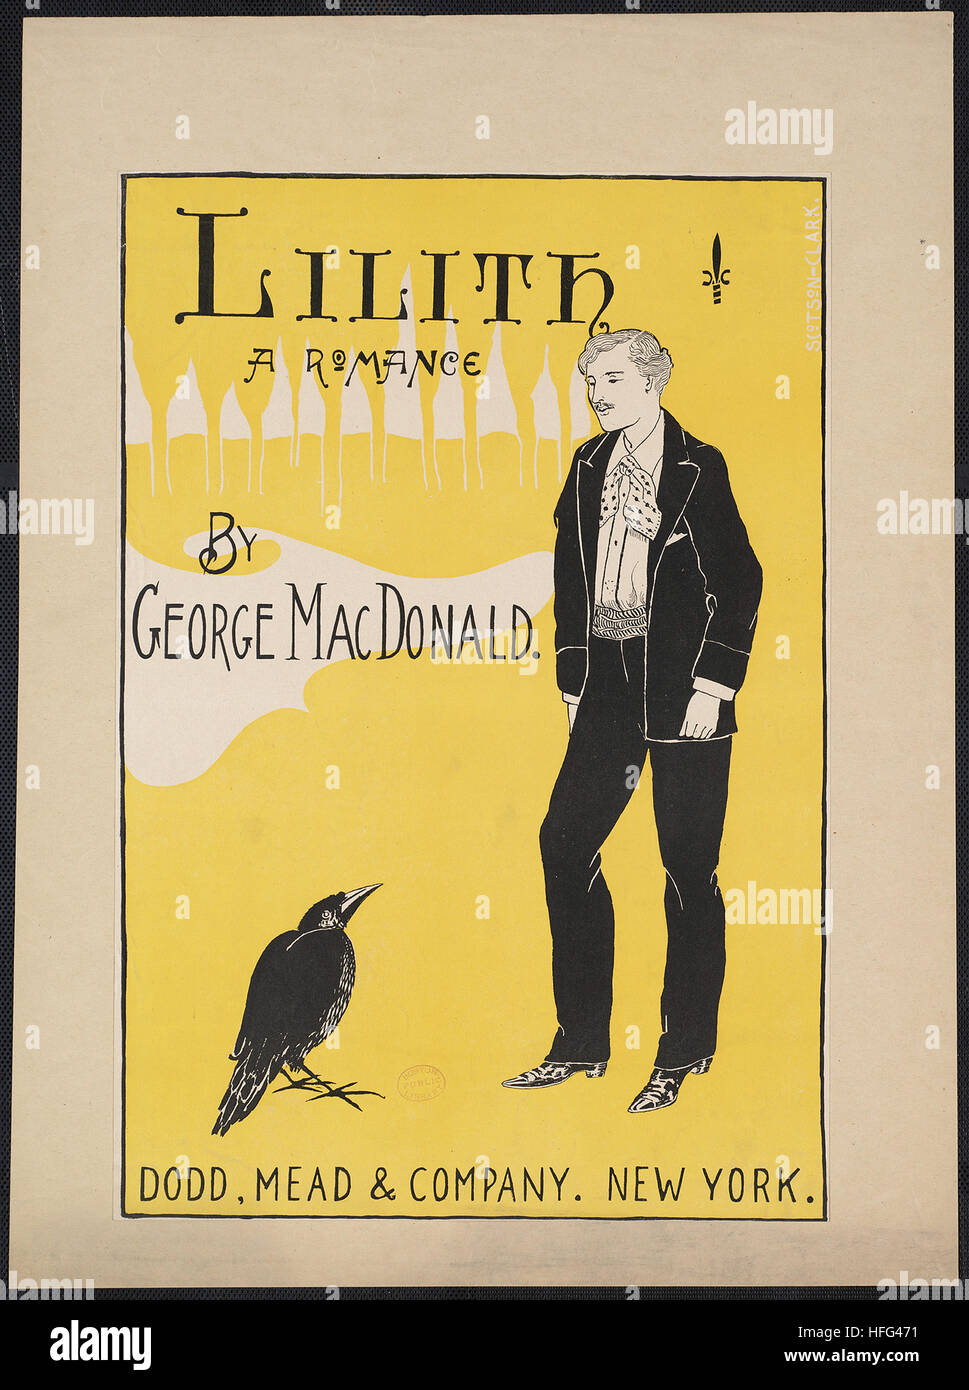 Lilith a romance by George MacDonald Stock Photo